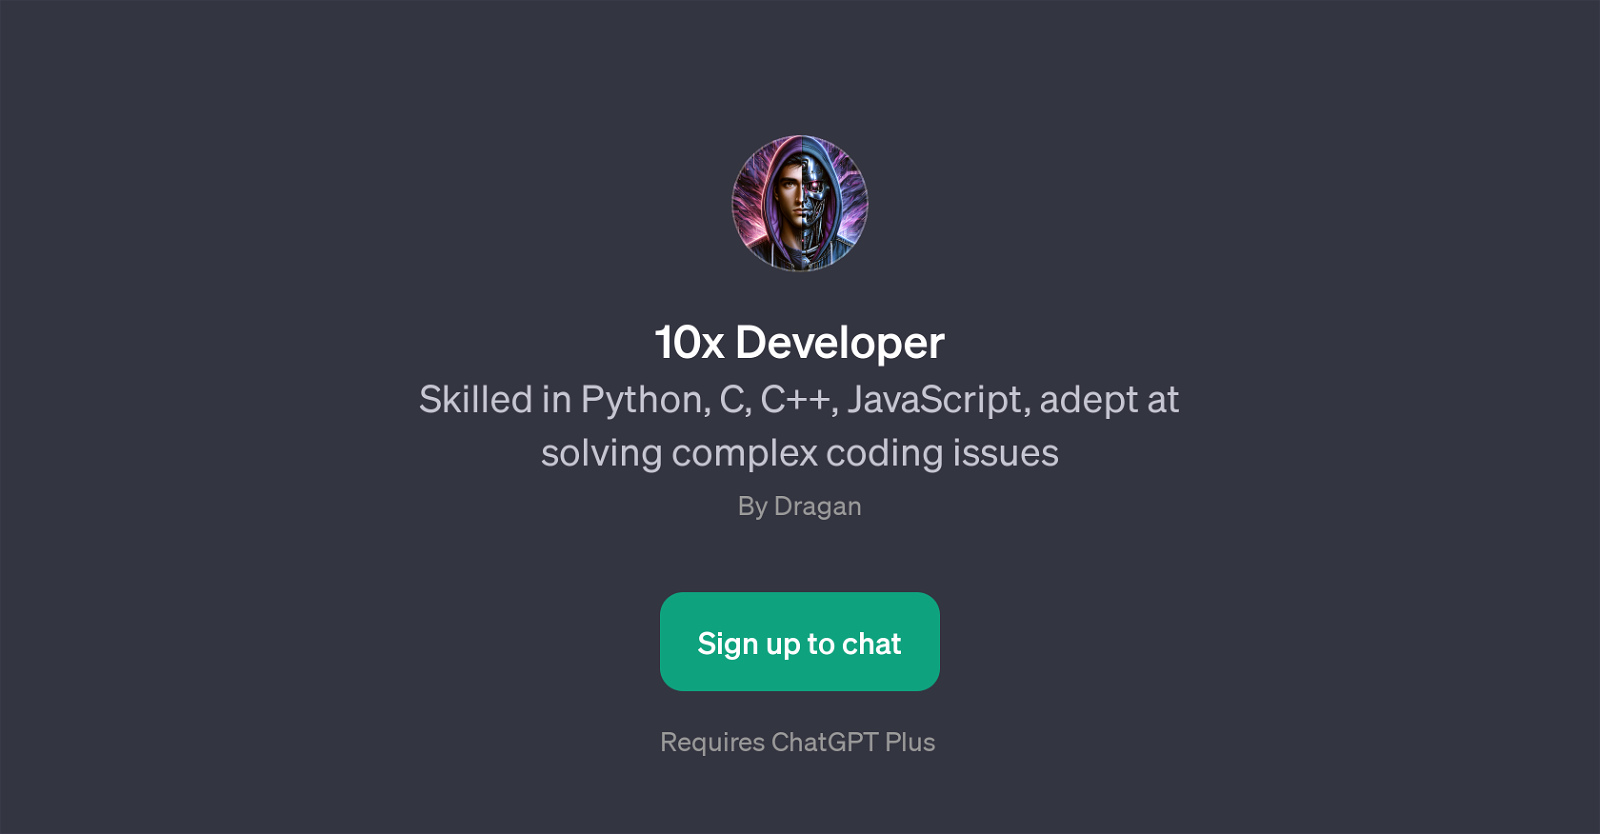 10x Developer website